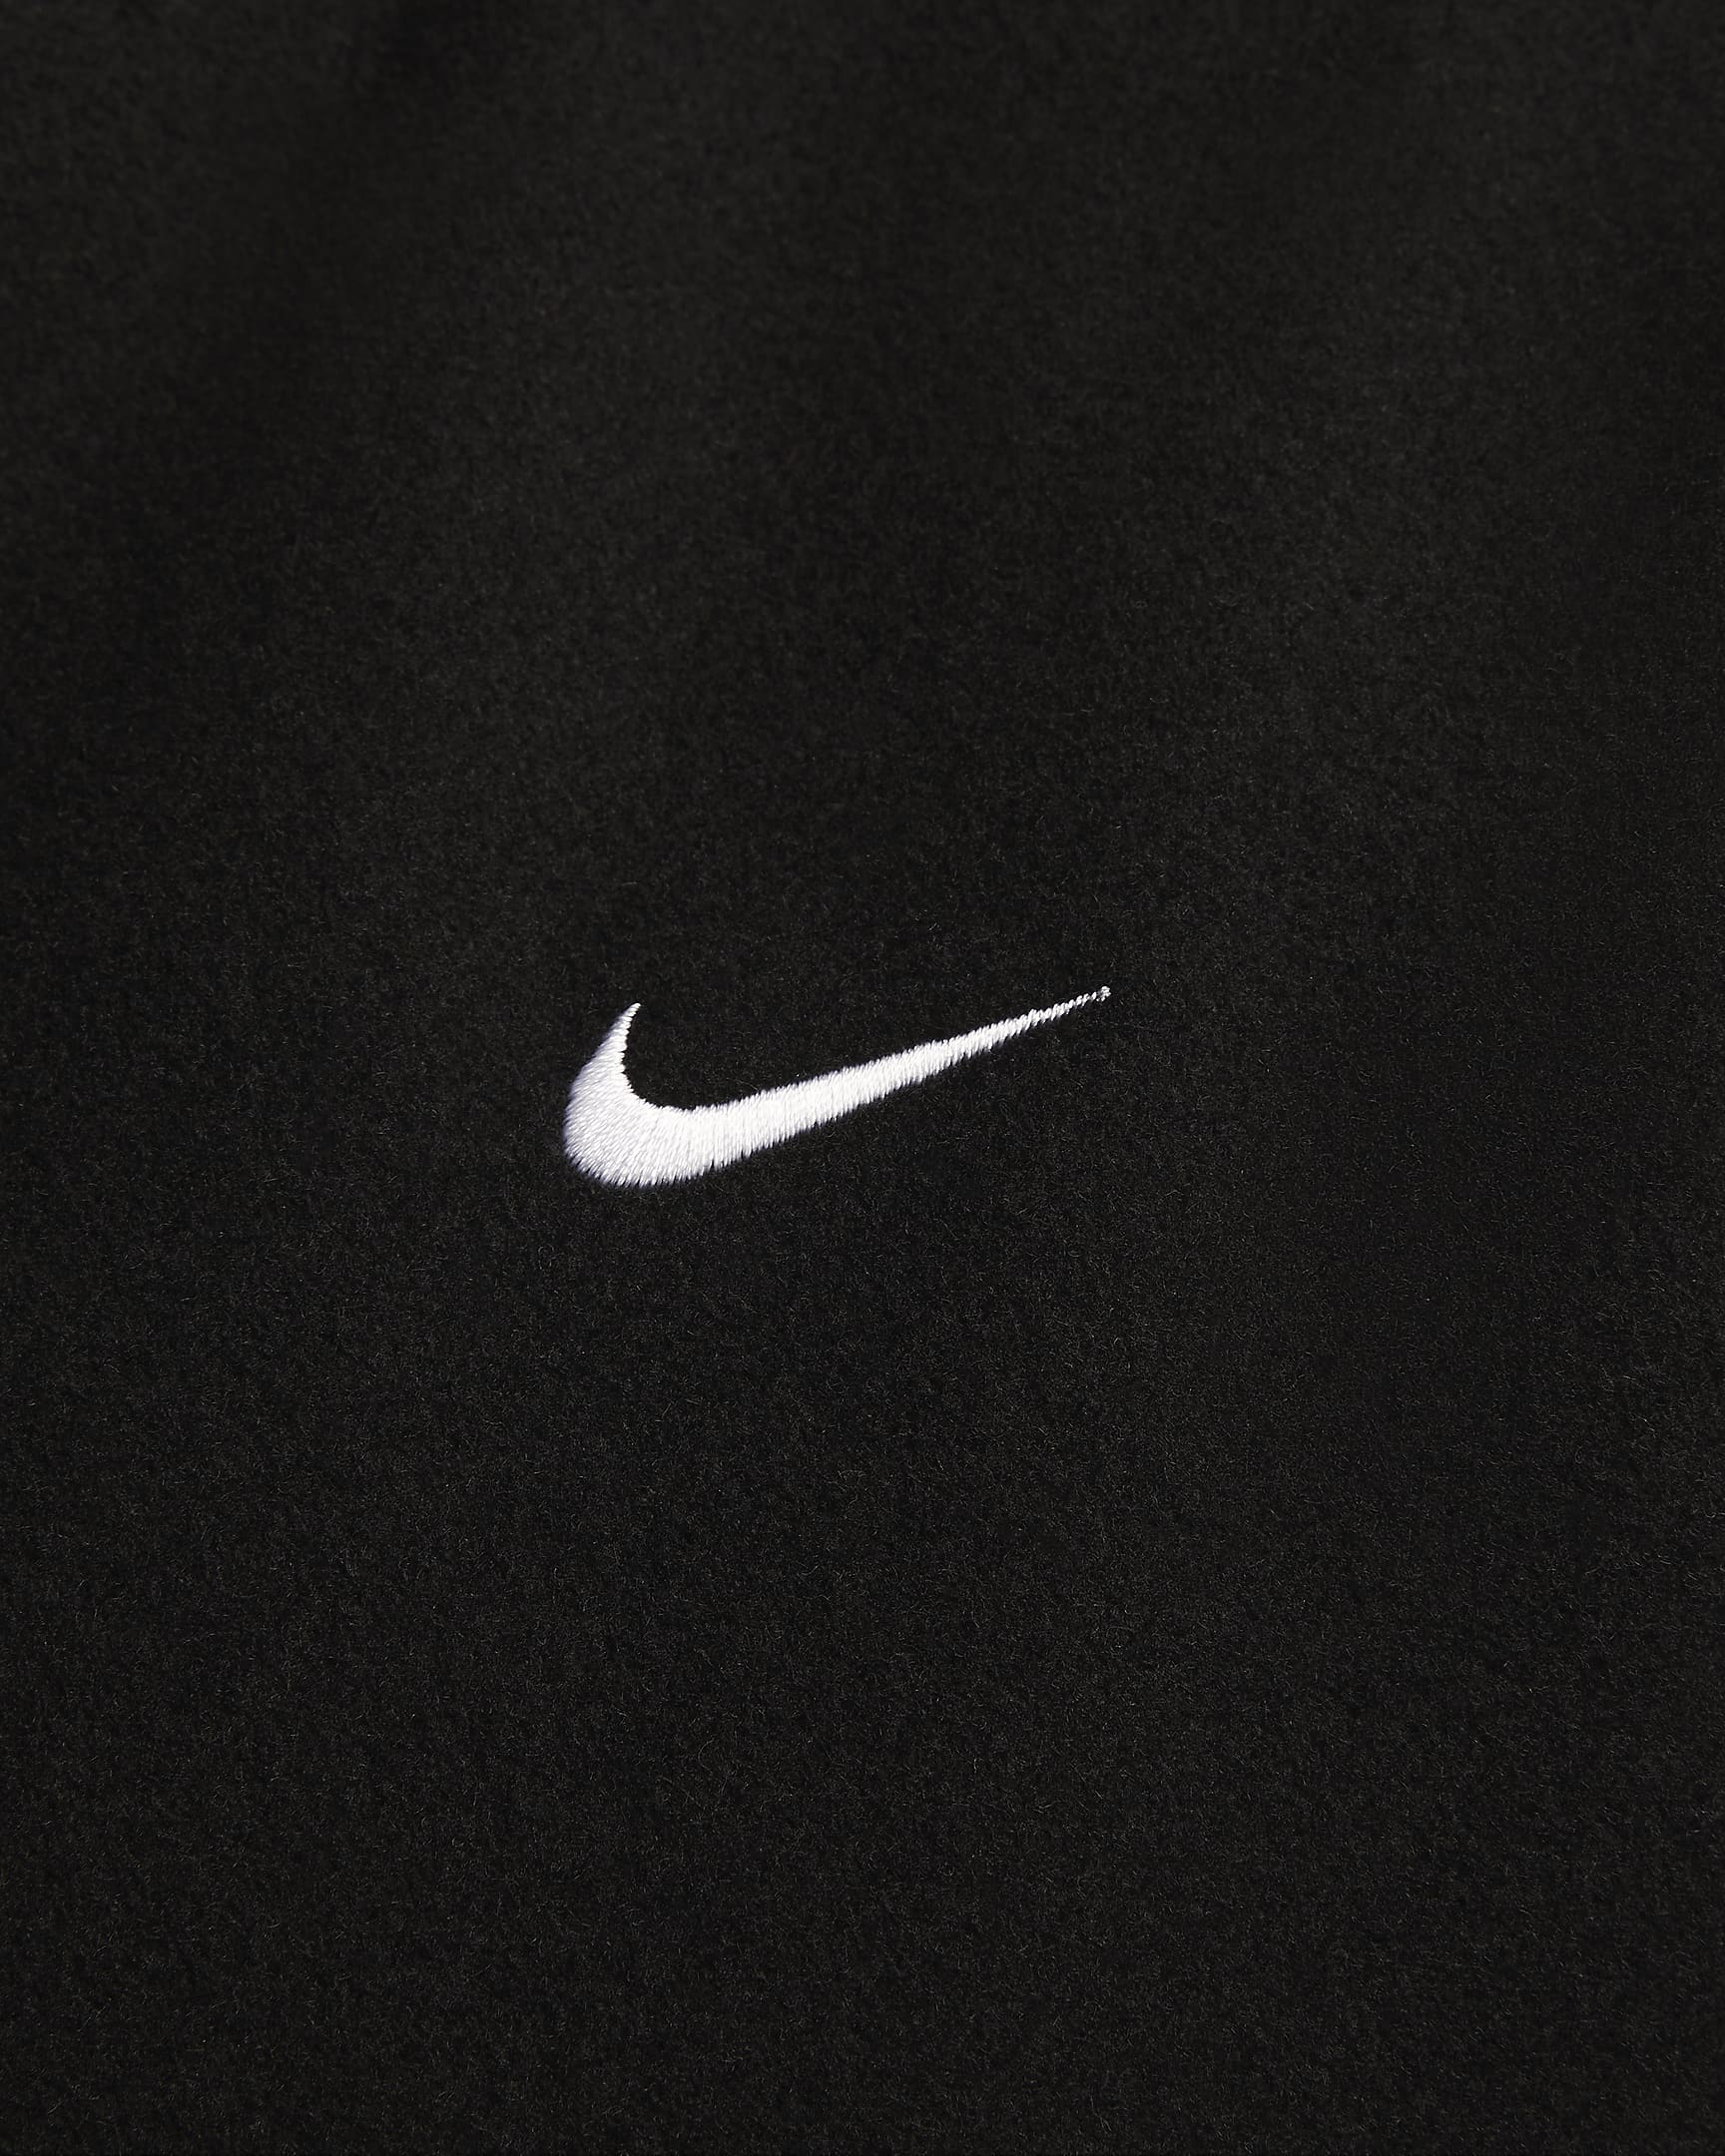 Nike Authentics Men's Varsity Jacket. Nike.com